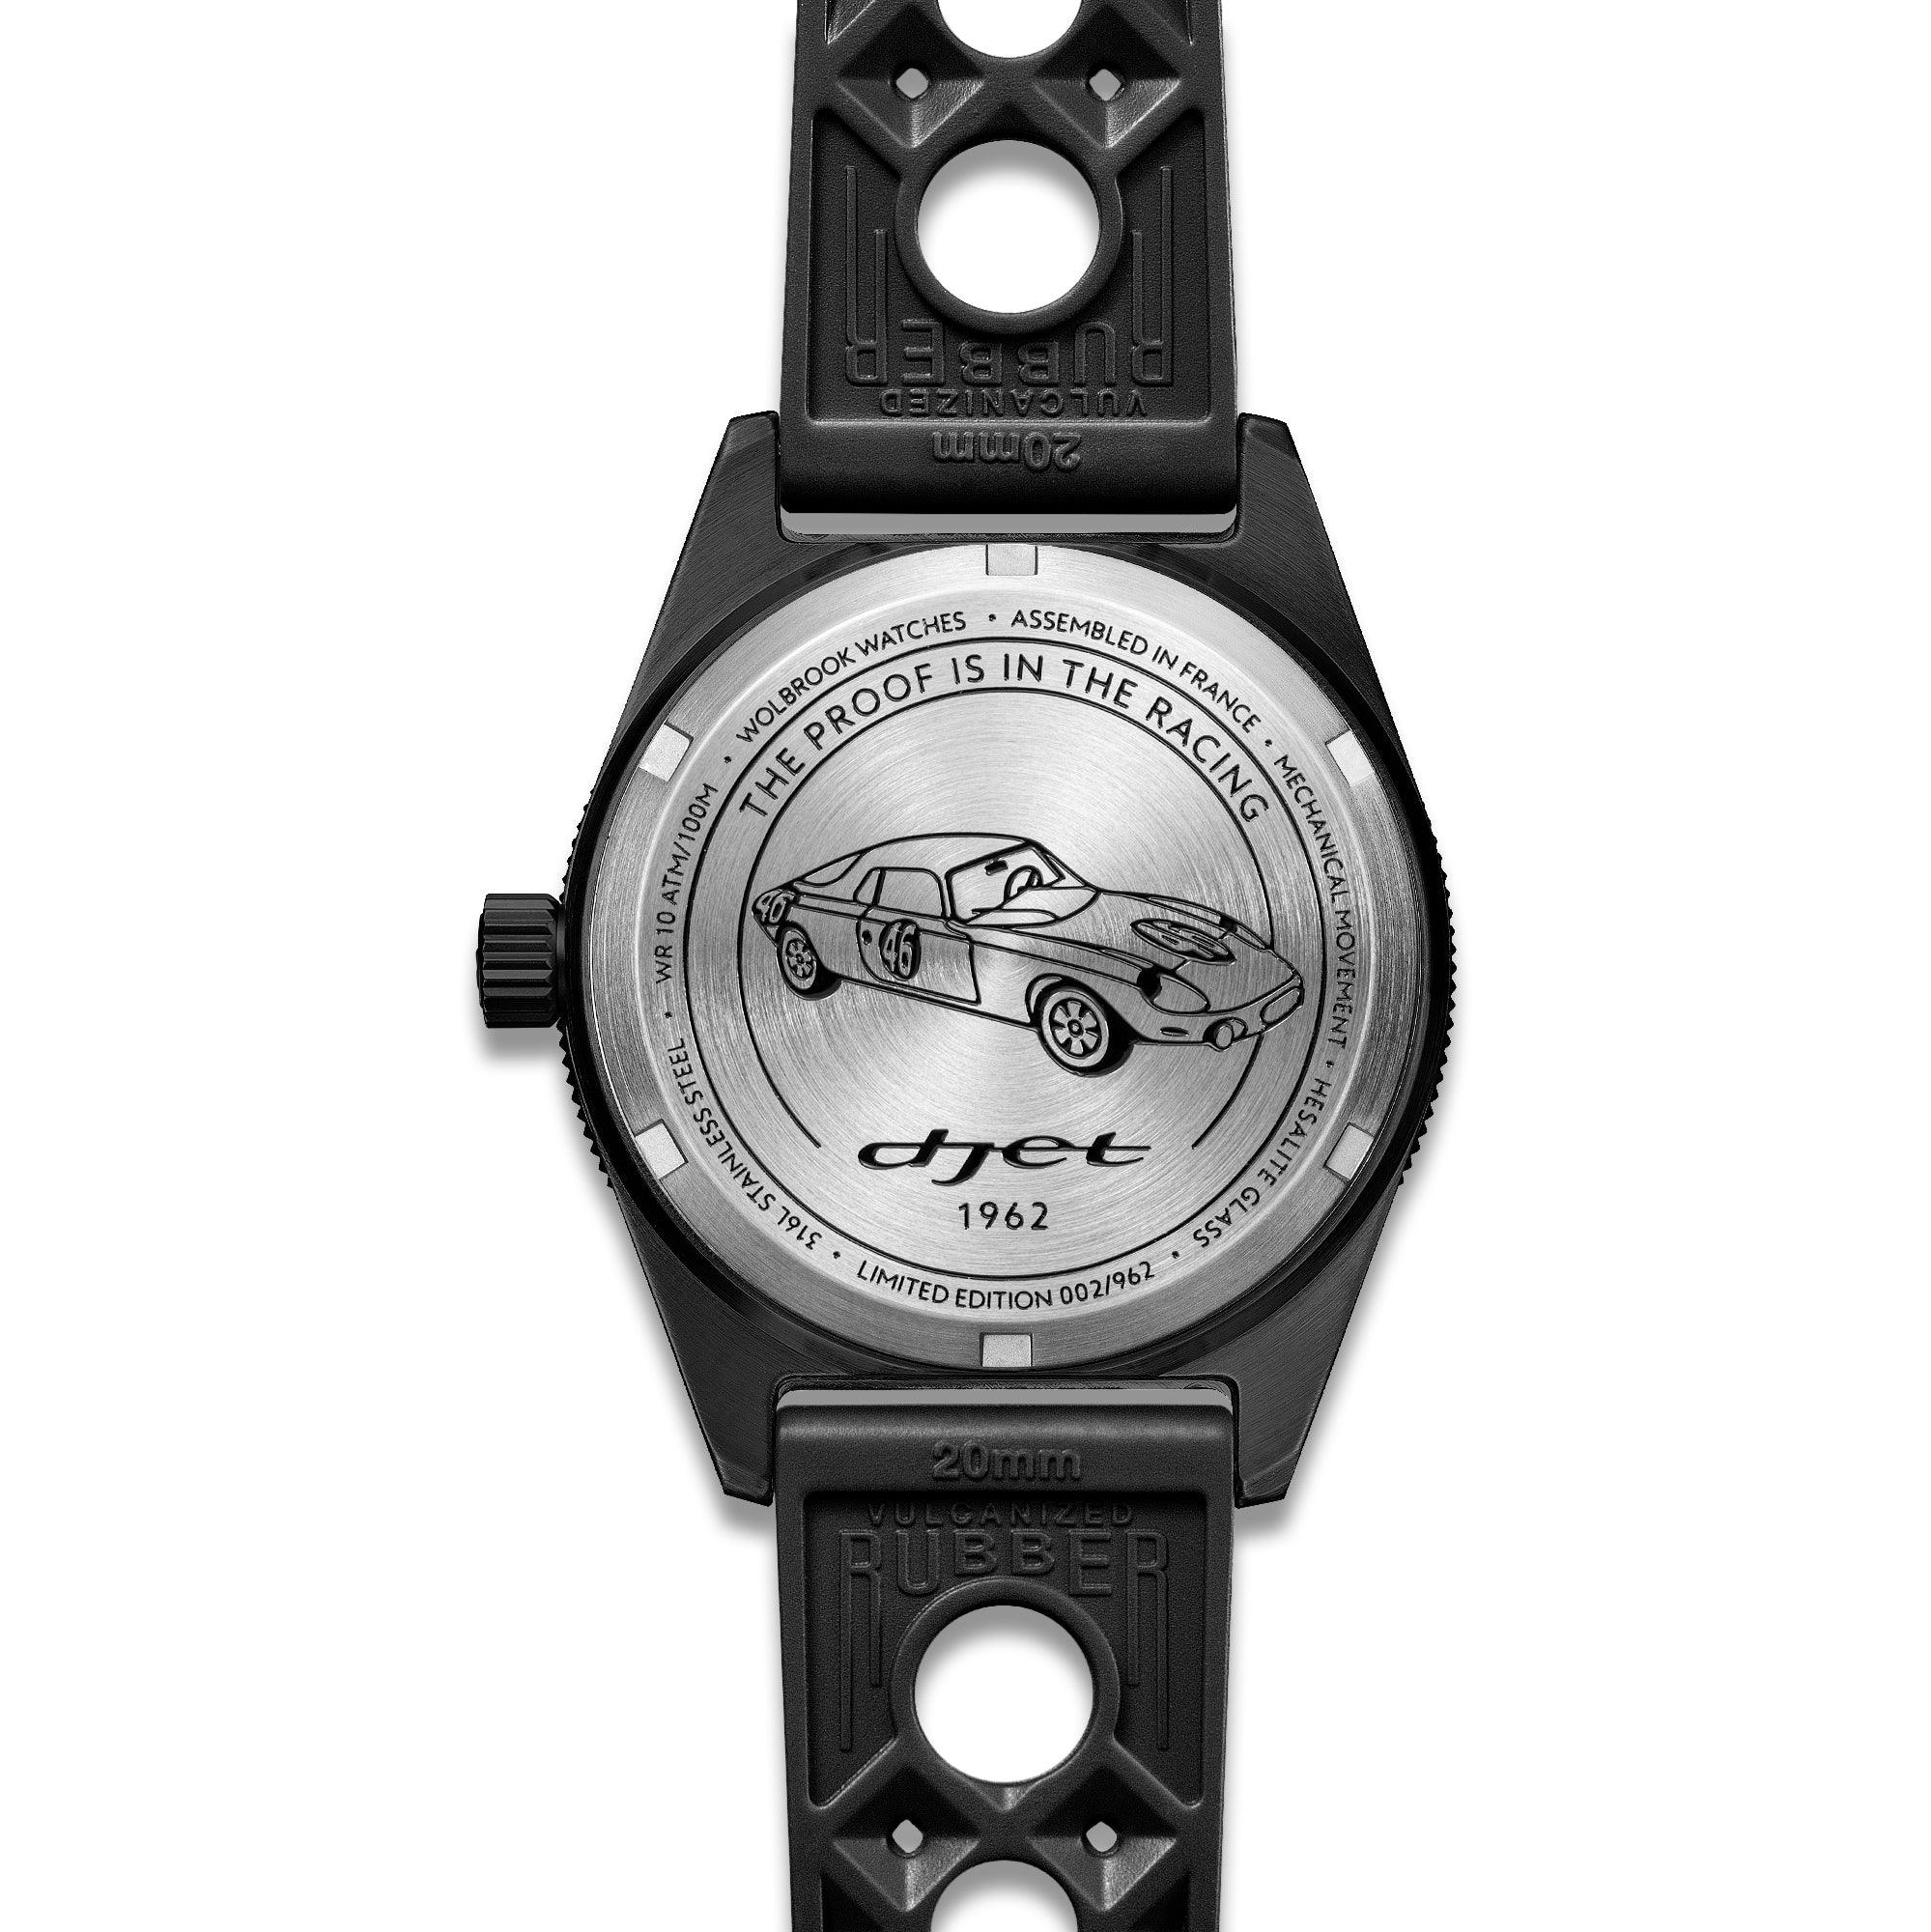 Grand Prix WT Professional Racing Watch on Tropic Strap - Black PVD - René Bonnet Djet 1962 Limited Edition